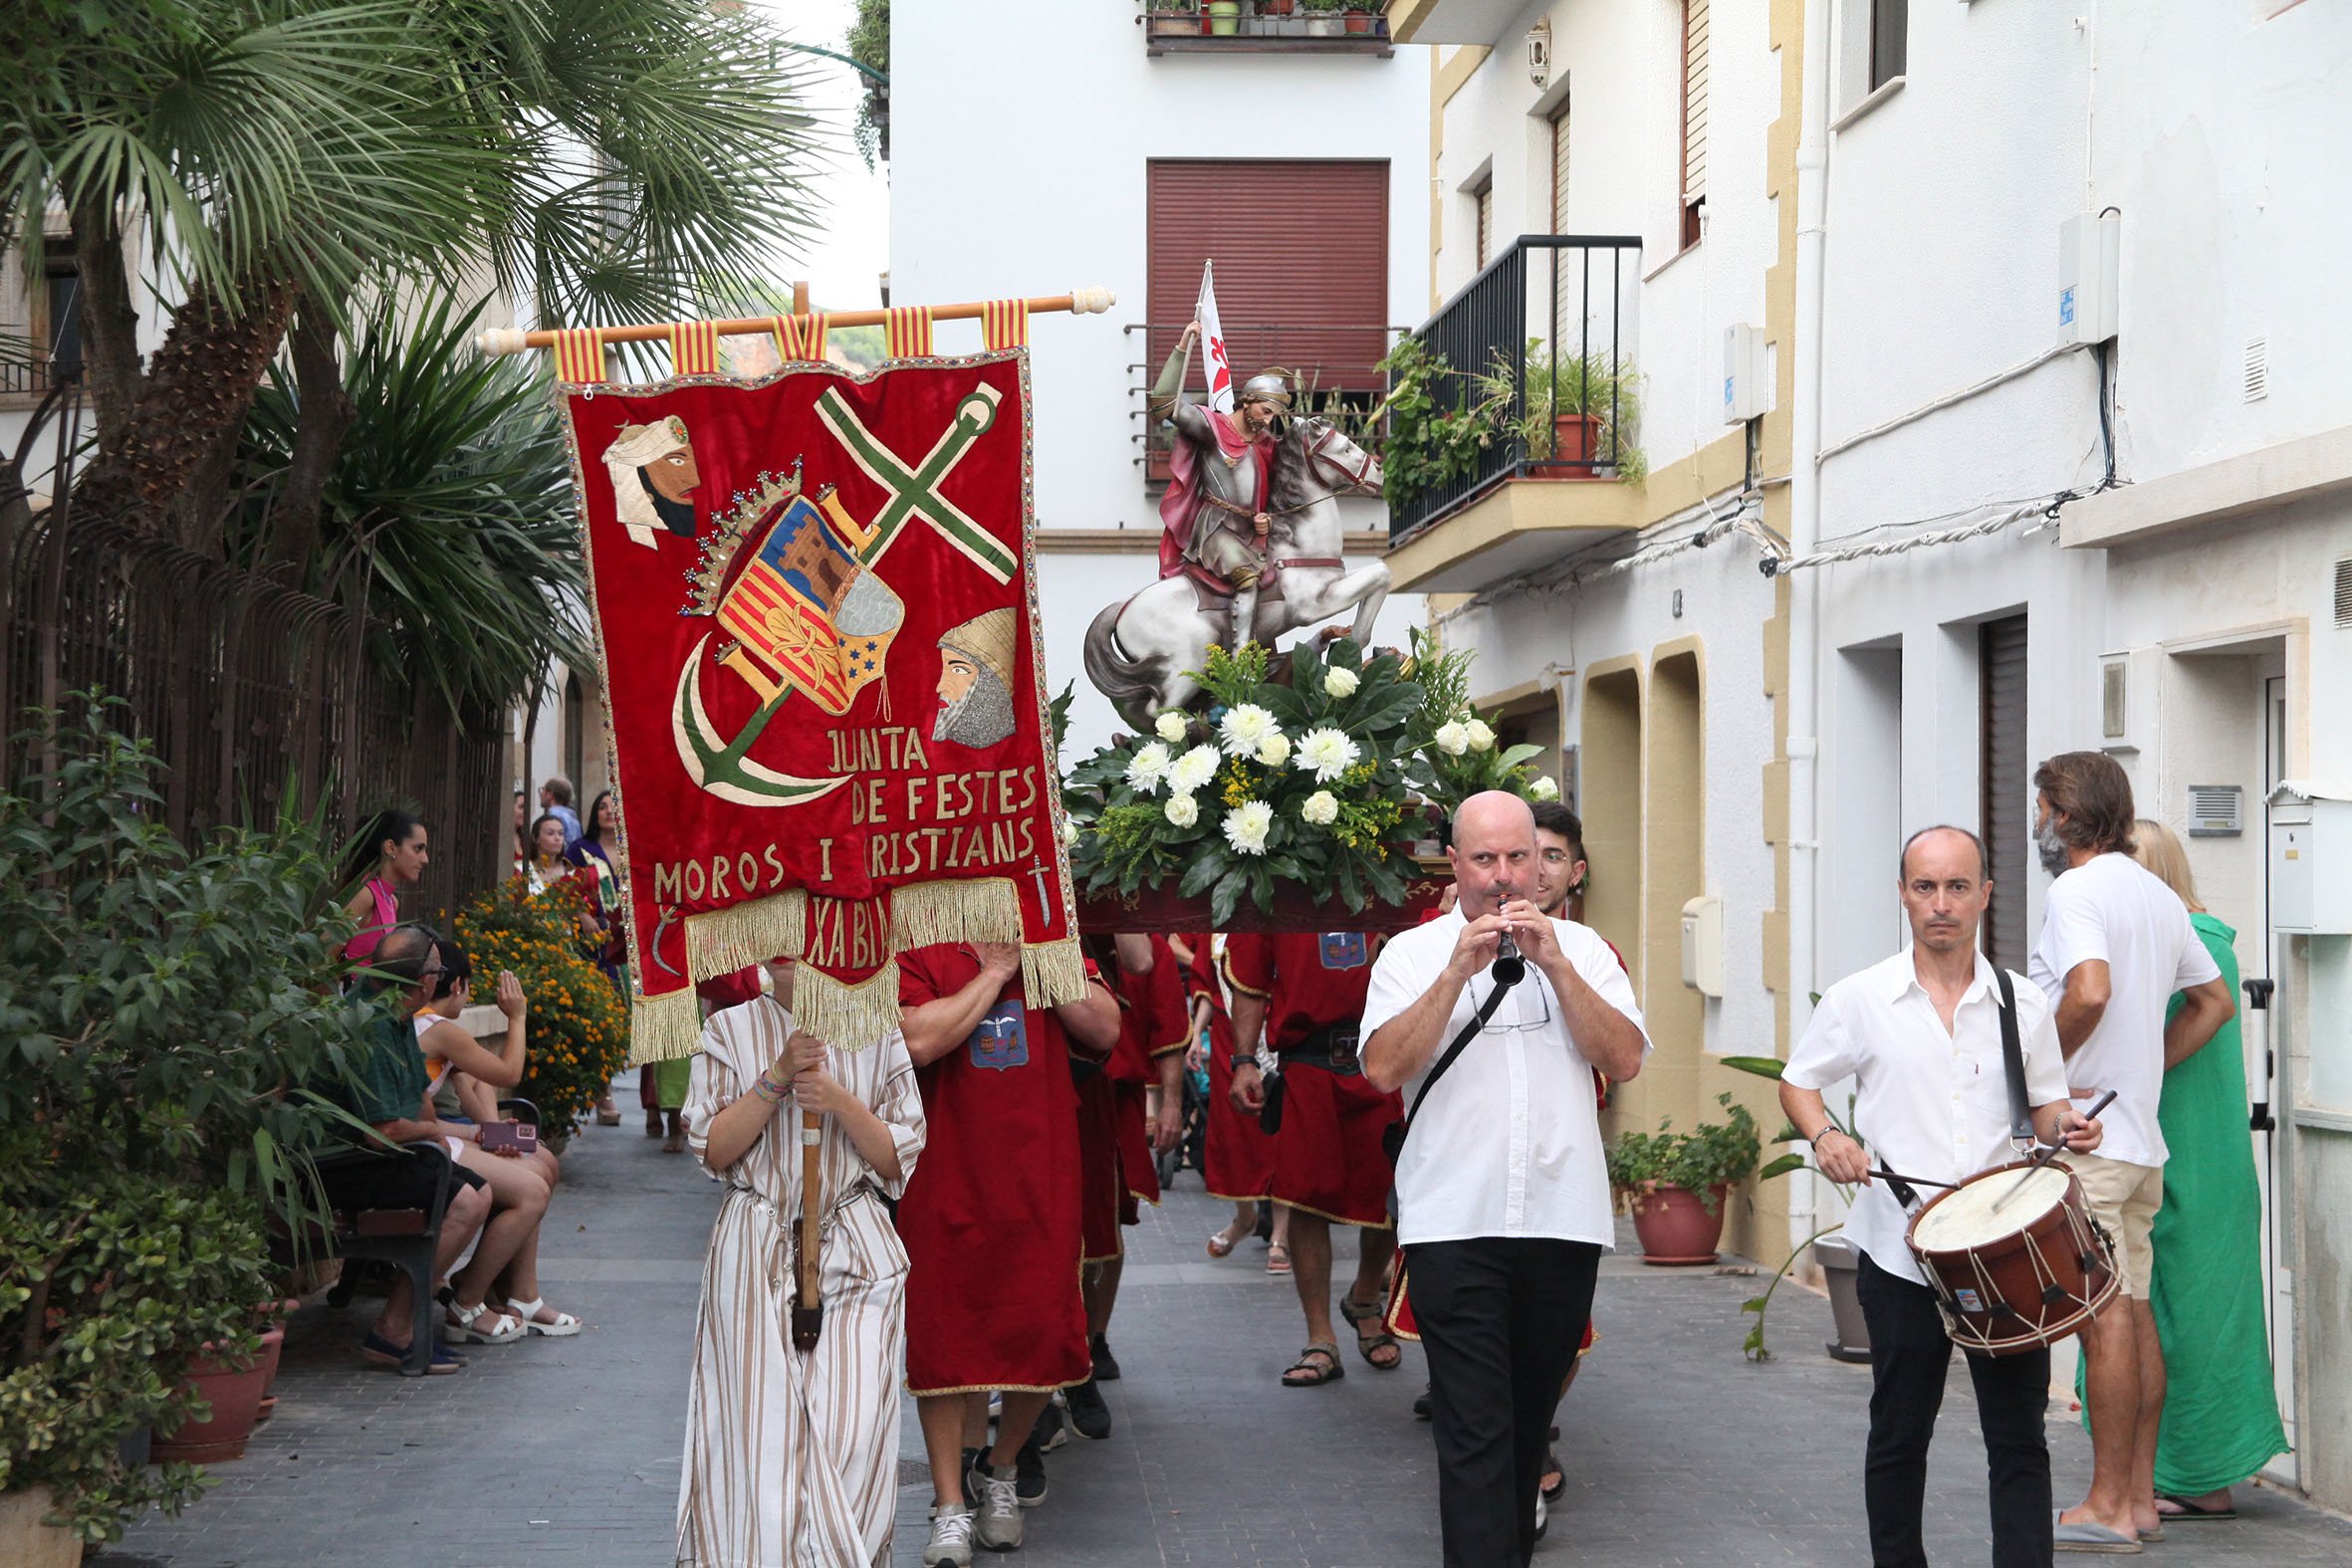 Ofrenda a Sant Jaume-Moros i Cristians Xàbia 2022 (22)